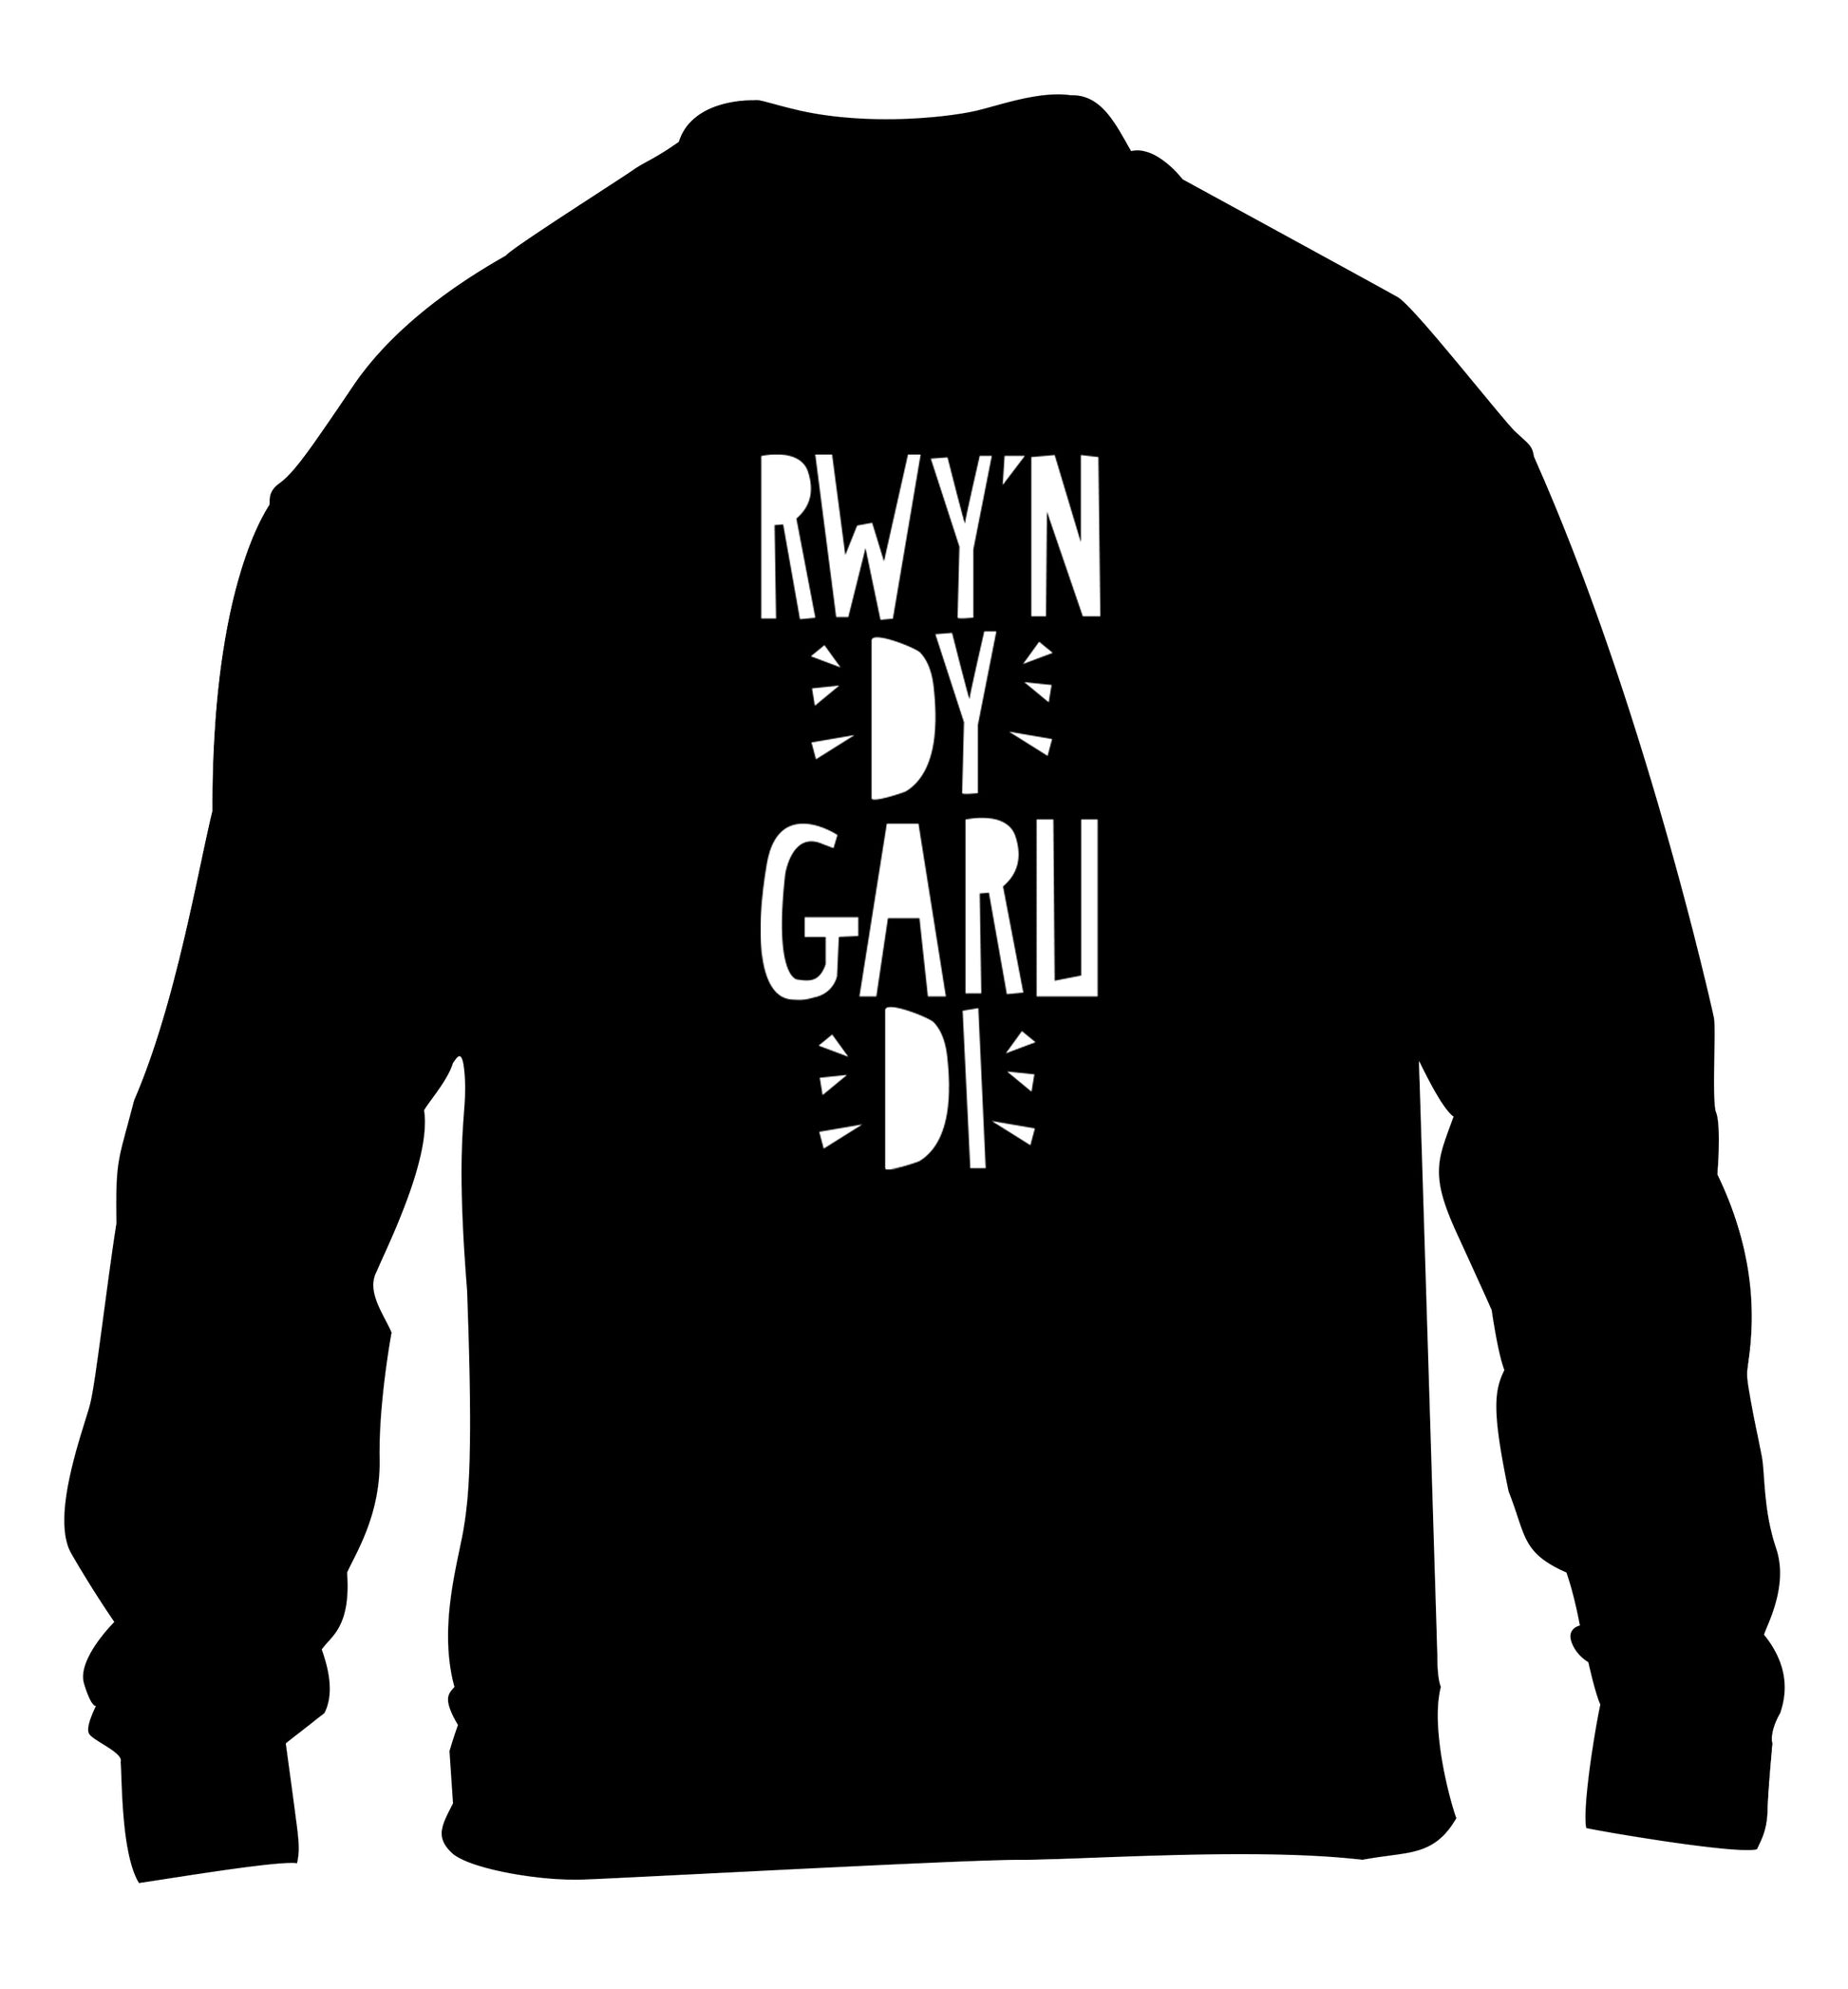 Rwy'n dy garu di - I love you children's black sweater 12-13 Years